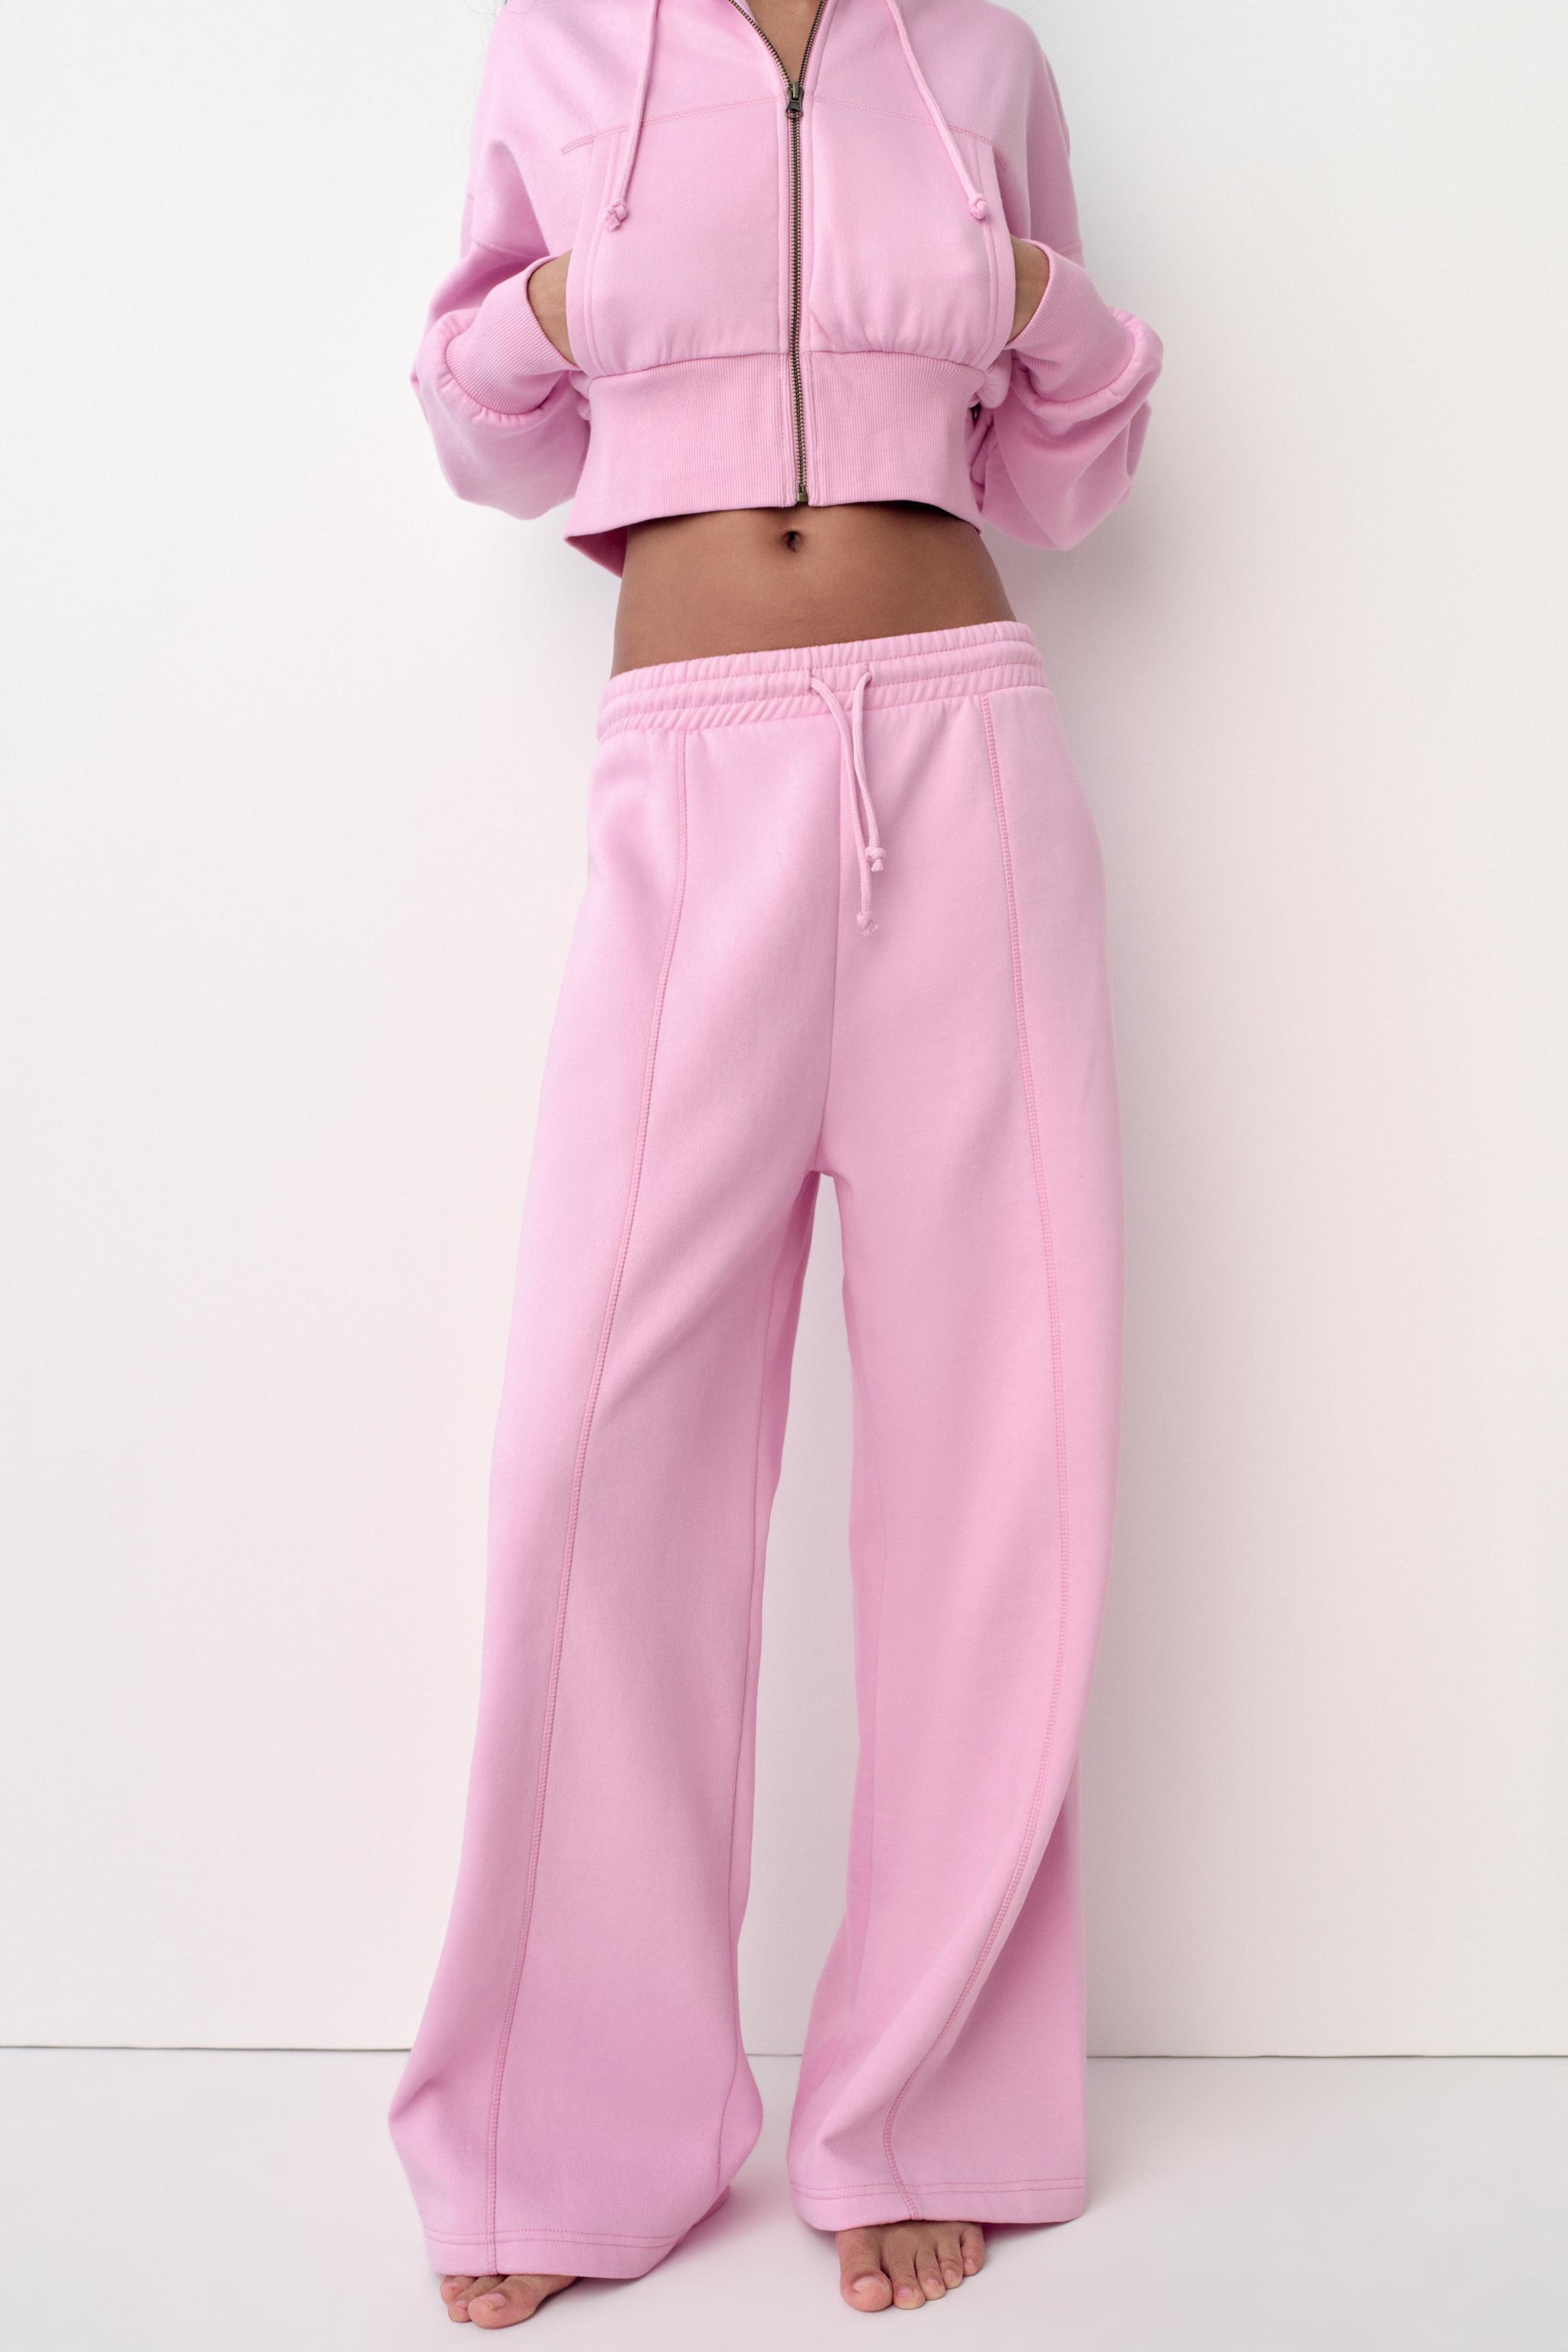 ZARA FUCHSIA GINGHAM MINI FLARE PANTS Pink - $47 (32% Off Retail) - From  Elizabeth